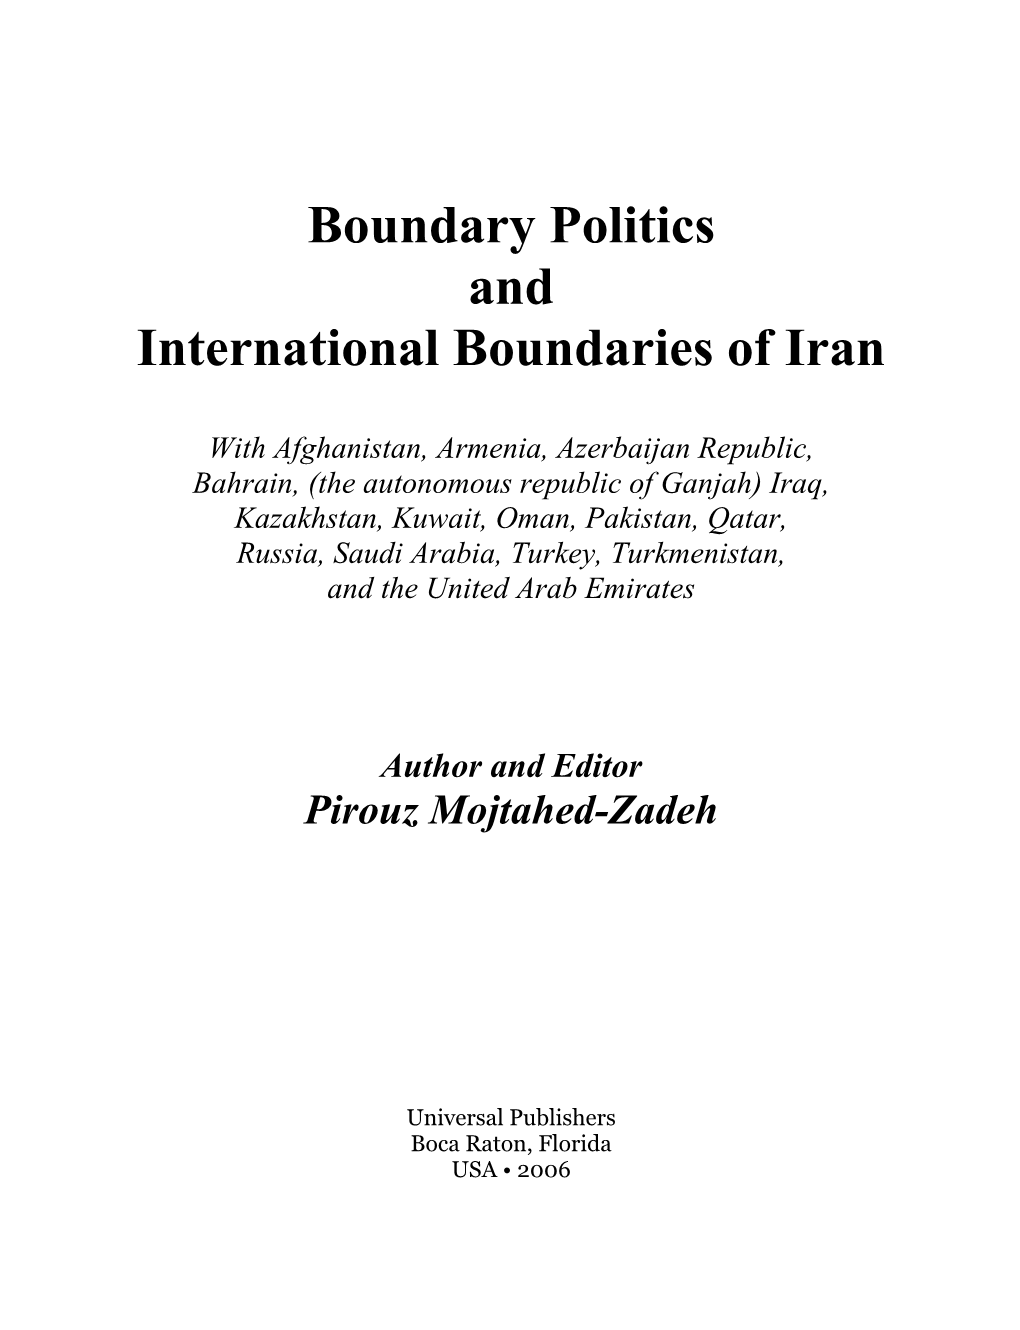 Boundary Politics and International Boundaries of Iran